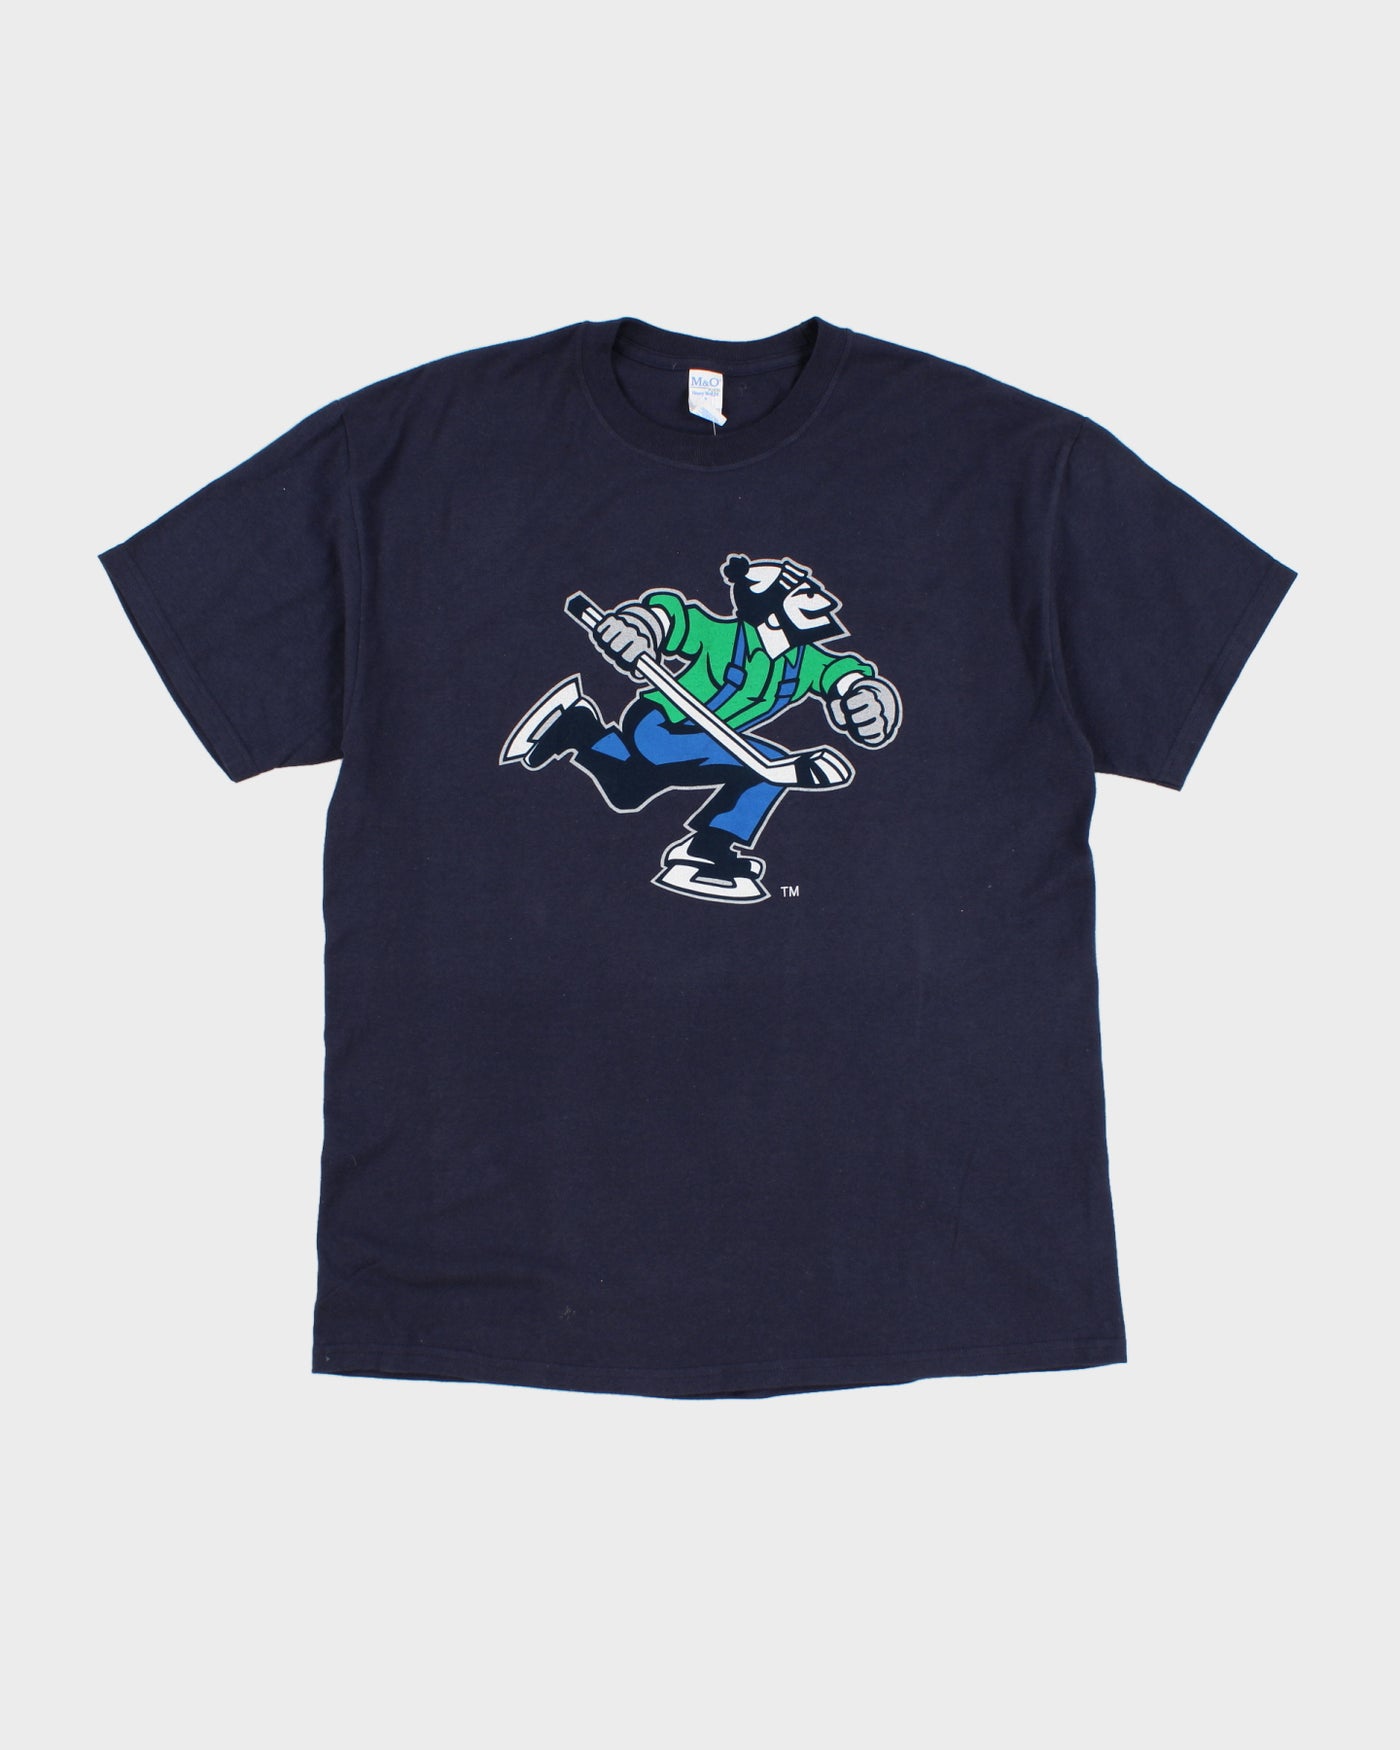 AHL x Abbotsford Canucks Hockey T-Shirt - L